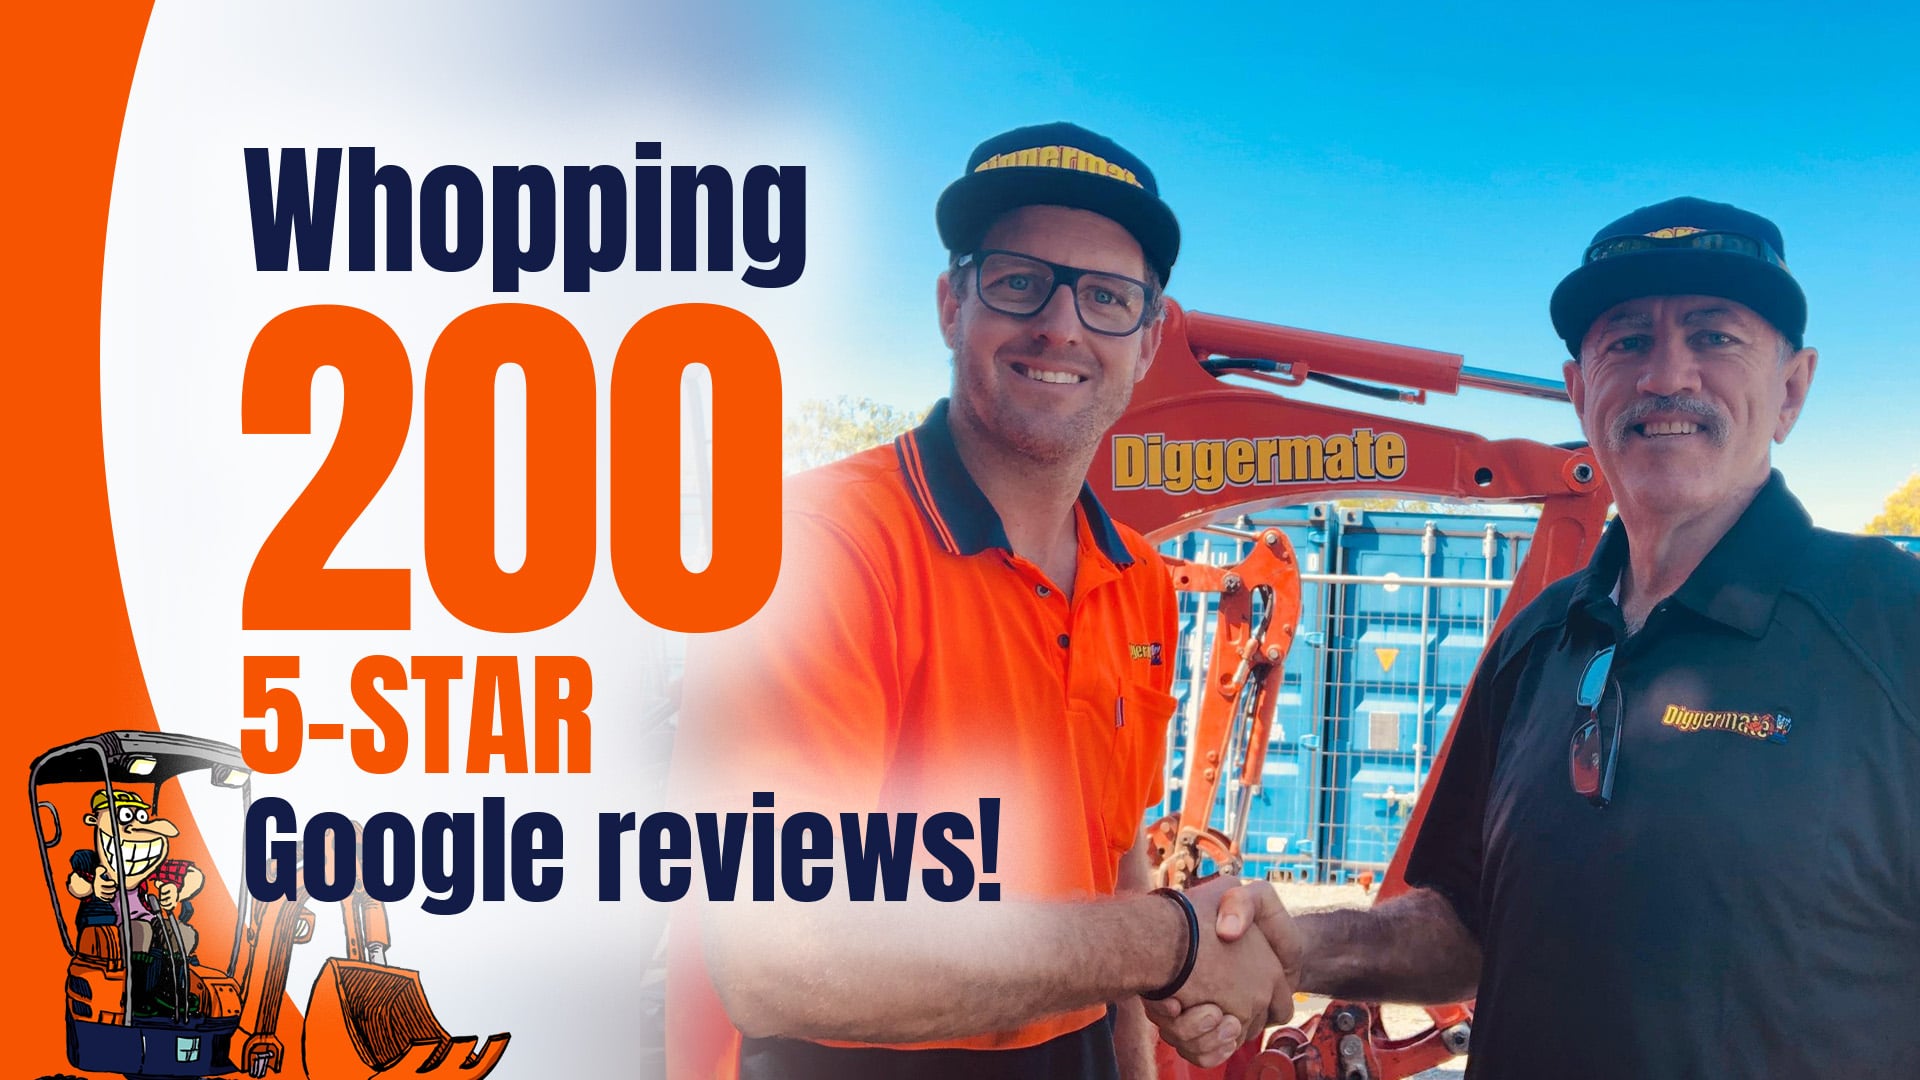 Diggermate North Lakes 200 5-STAR Google reviews